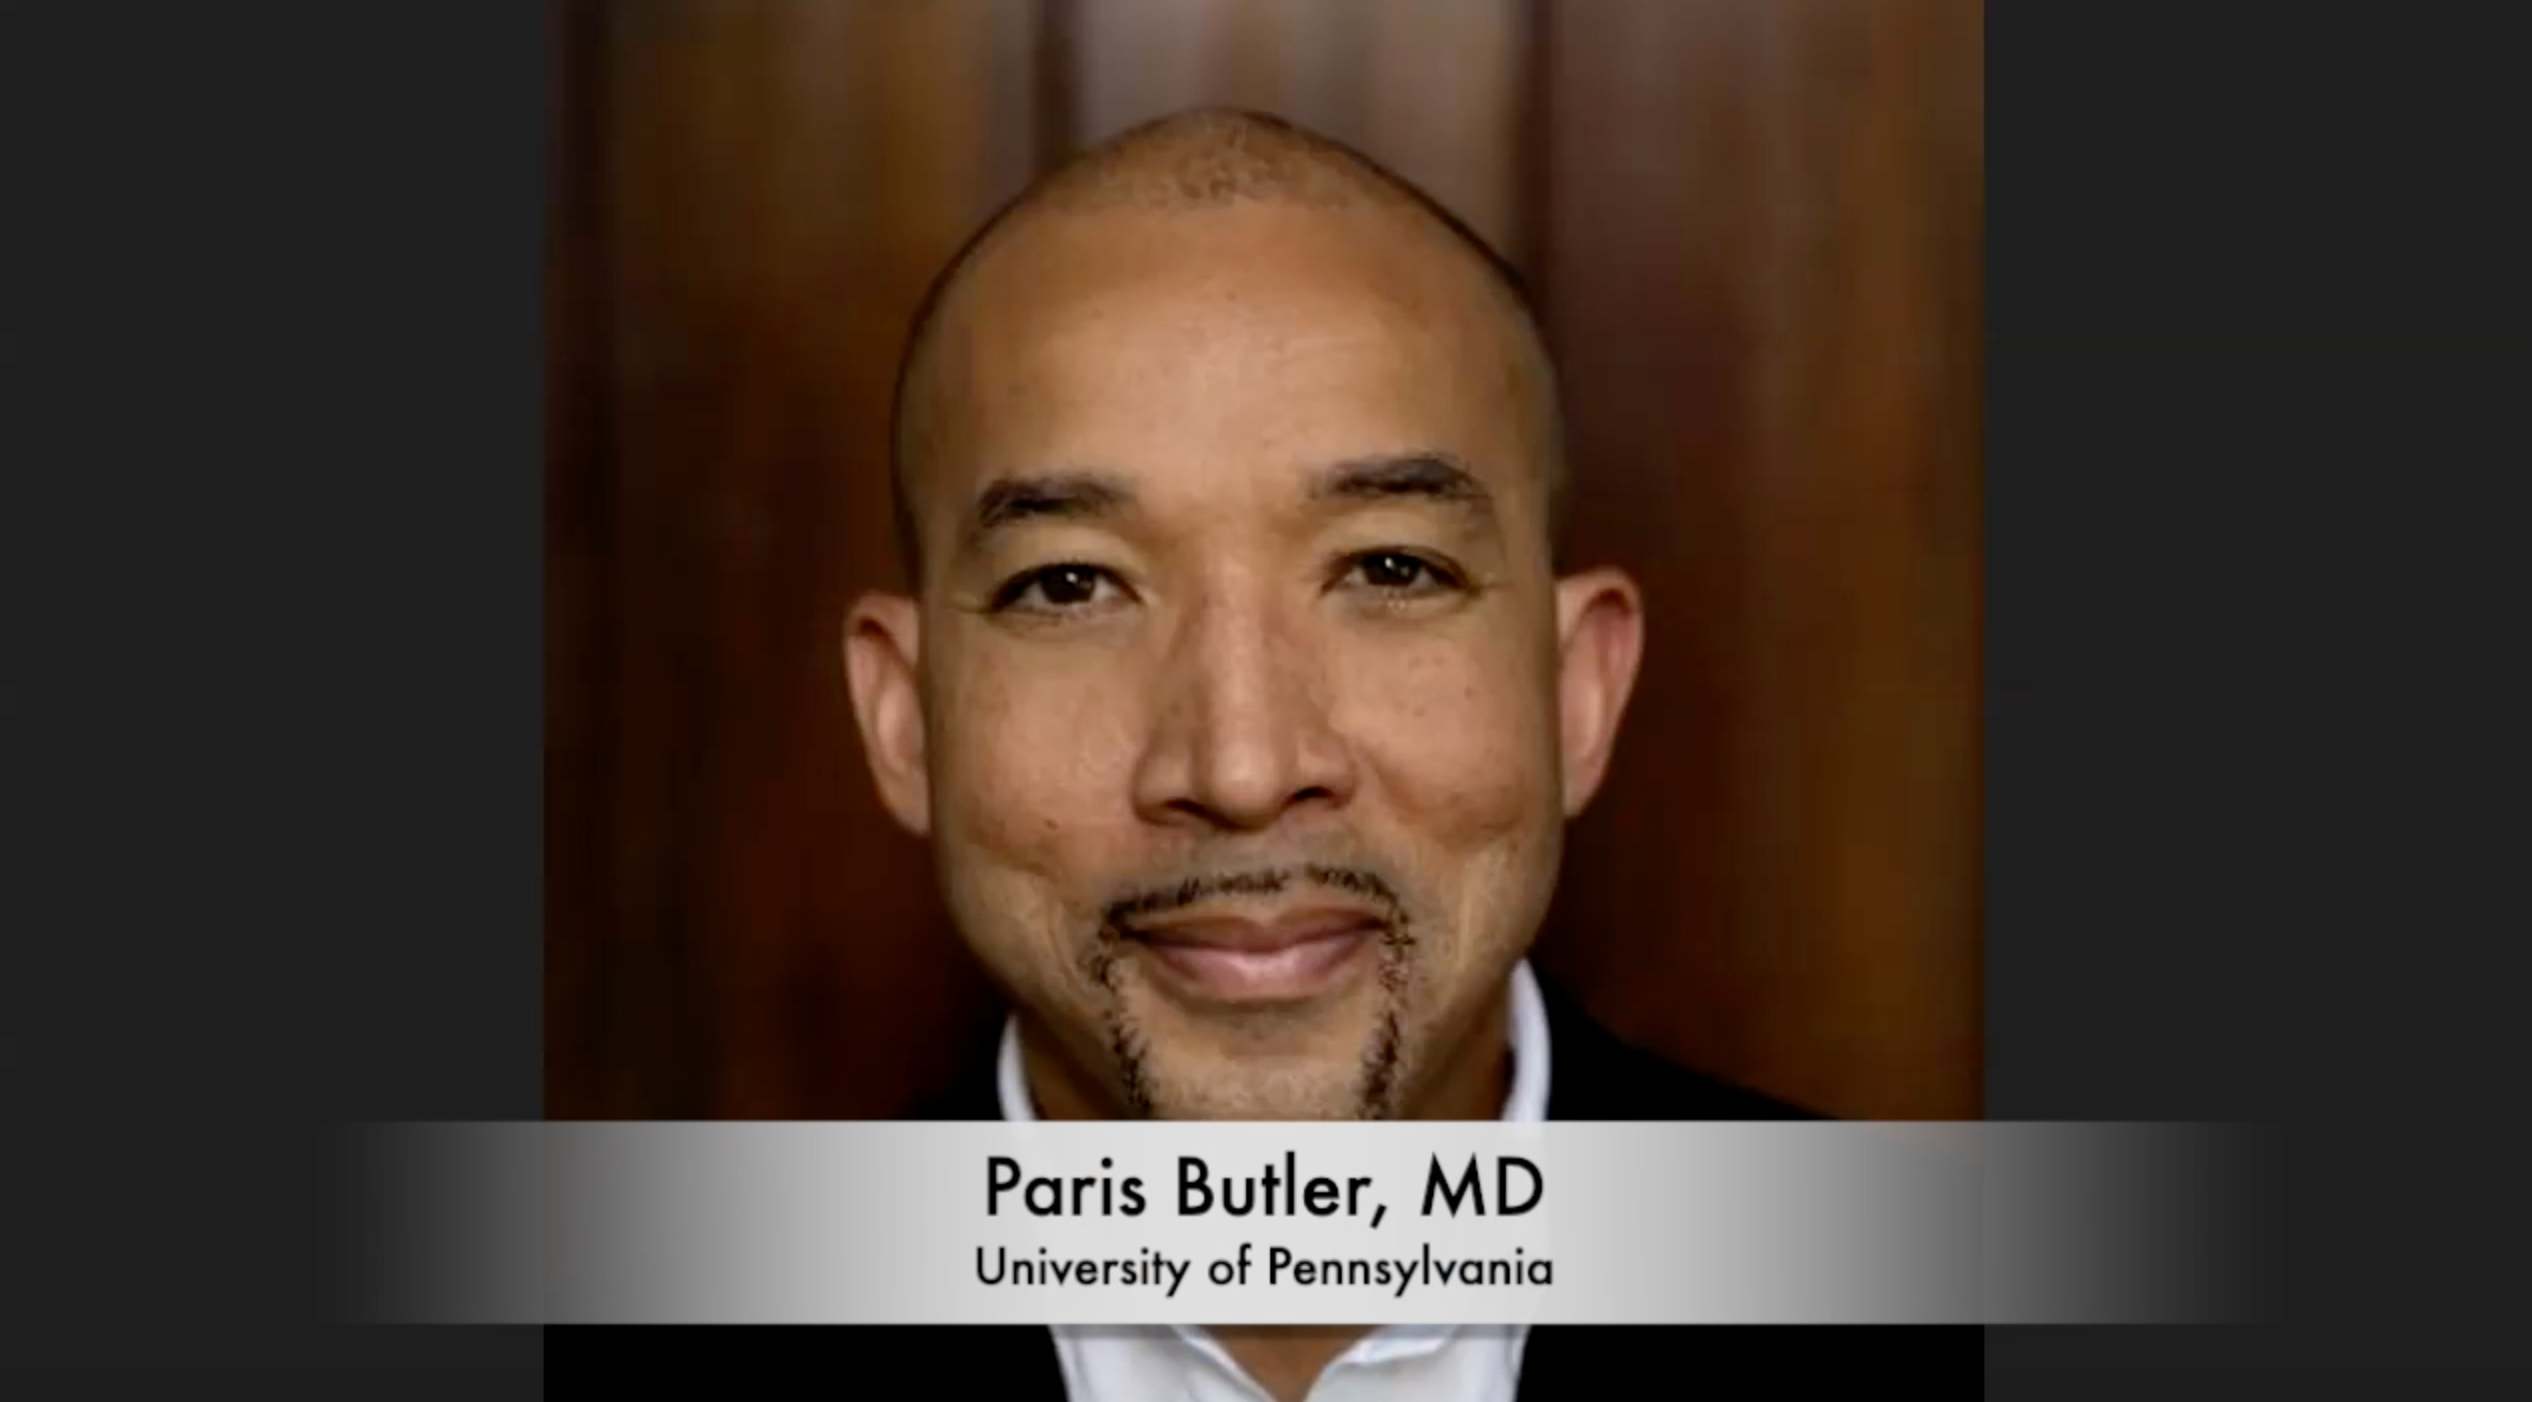 Paris Butler, MD